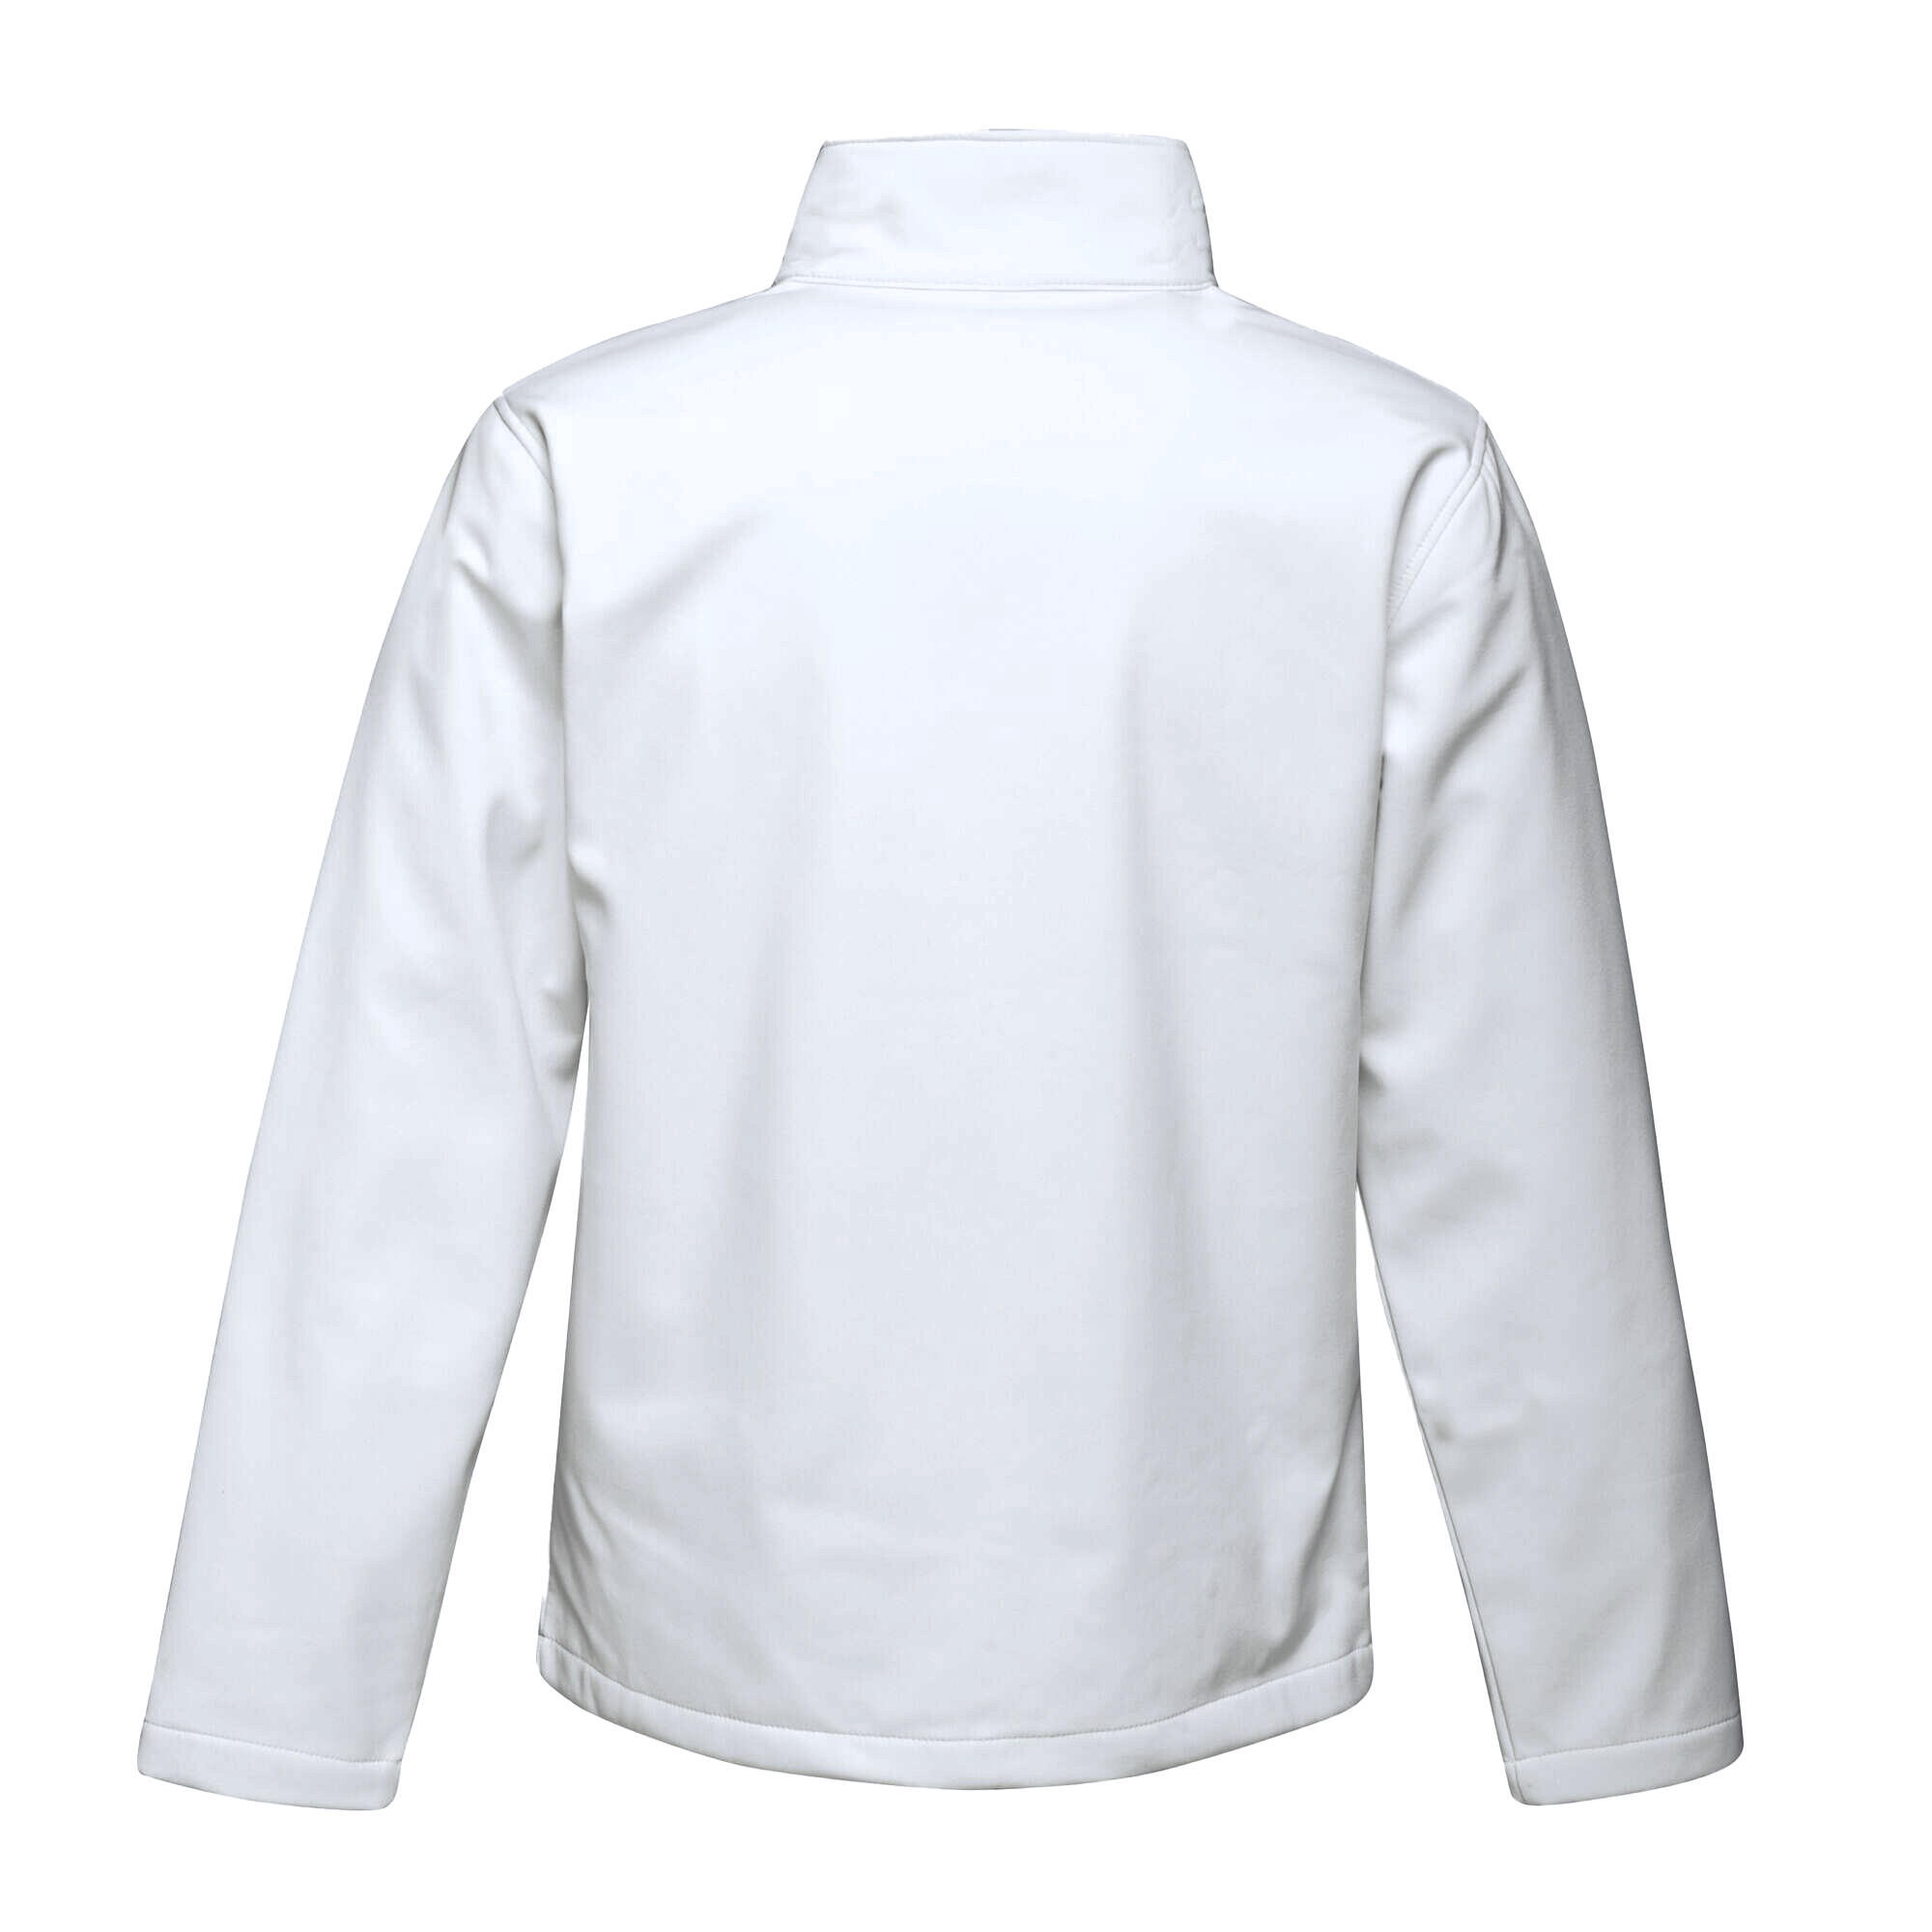 Standout Mens Ablaze Printable Soft Shell Jacket (White/Light Steel) 2/5